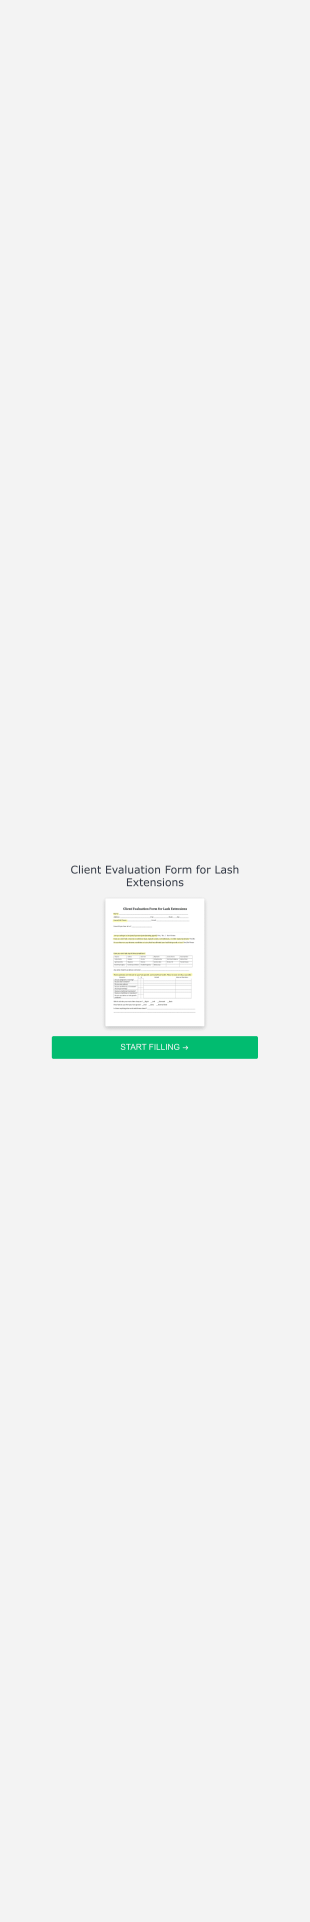 Client Evaluation Form For Lash Extensions Form Template